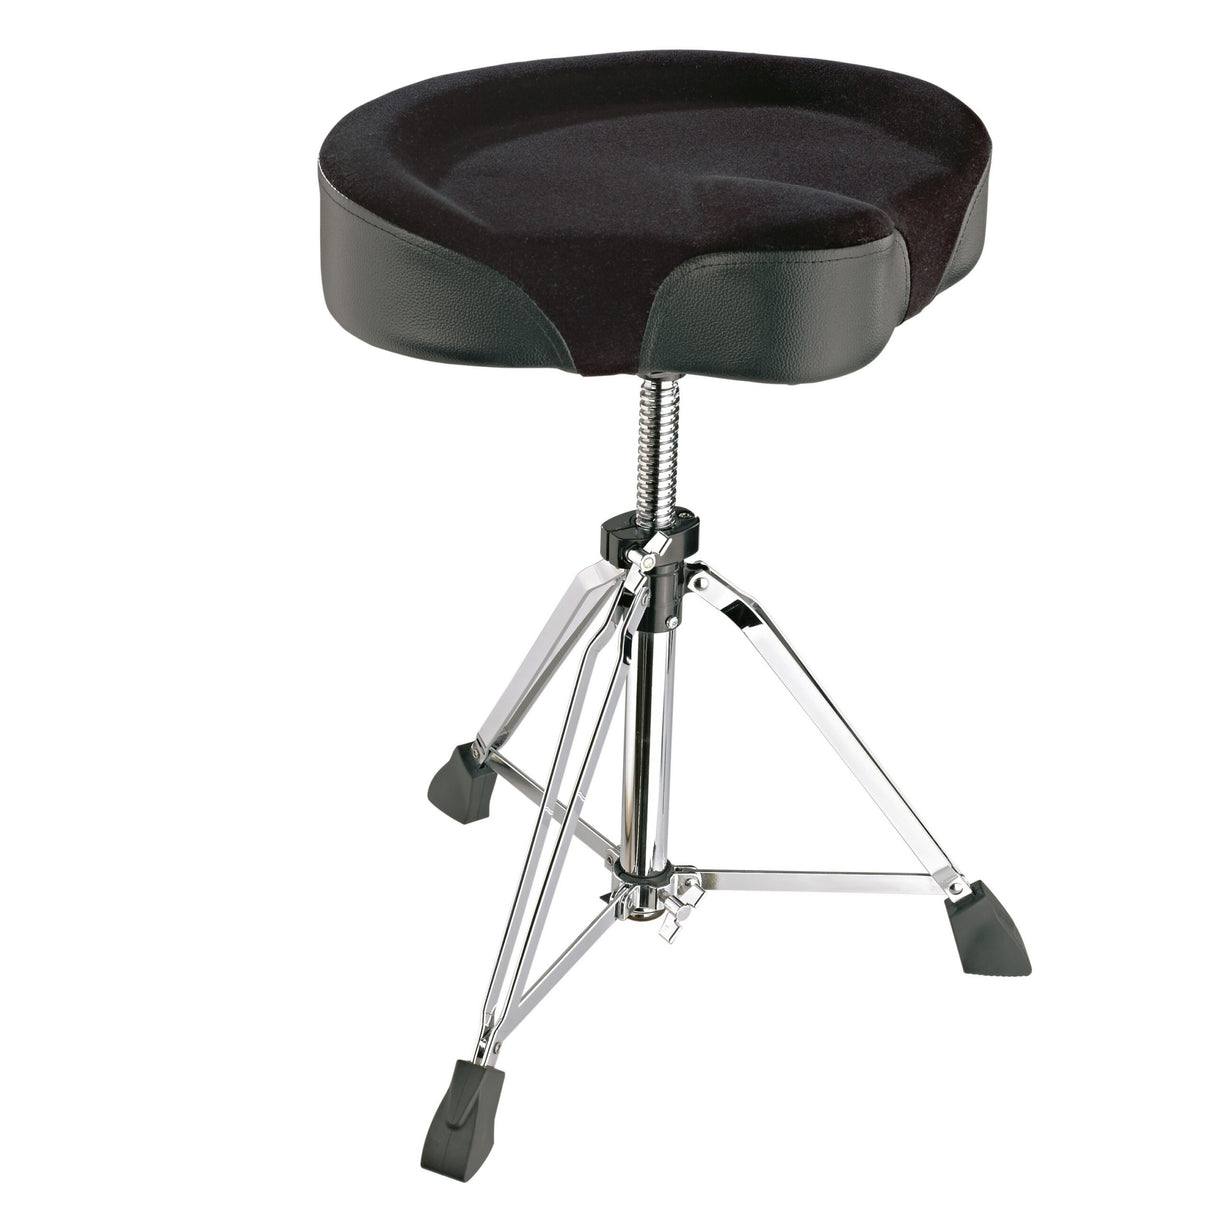 K&M 14039 Spindle Drummers Throne Chair, Black Velvet